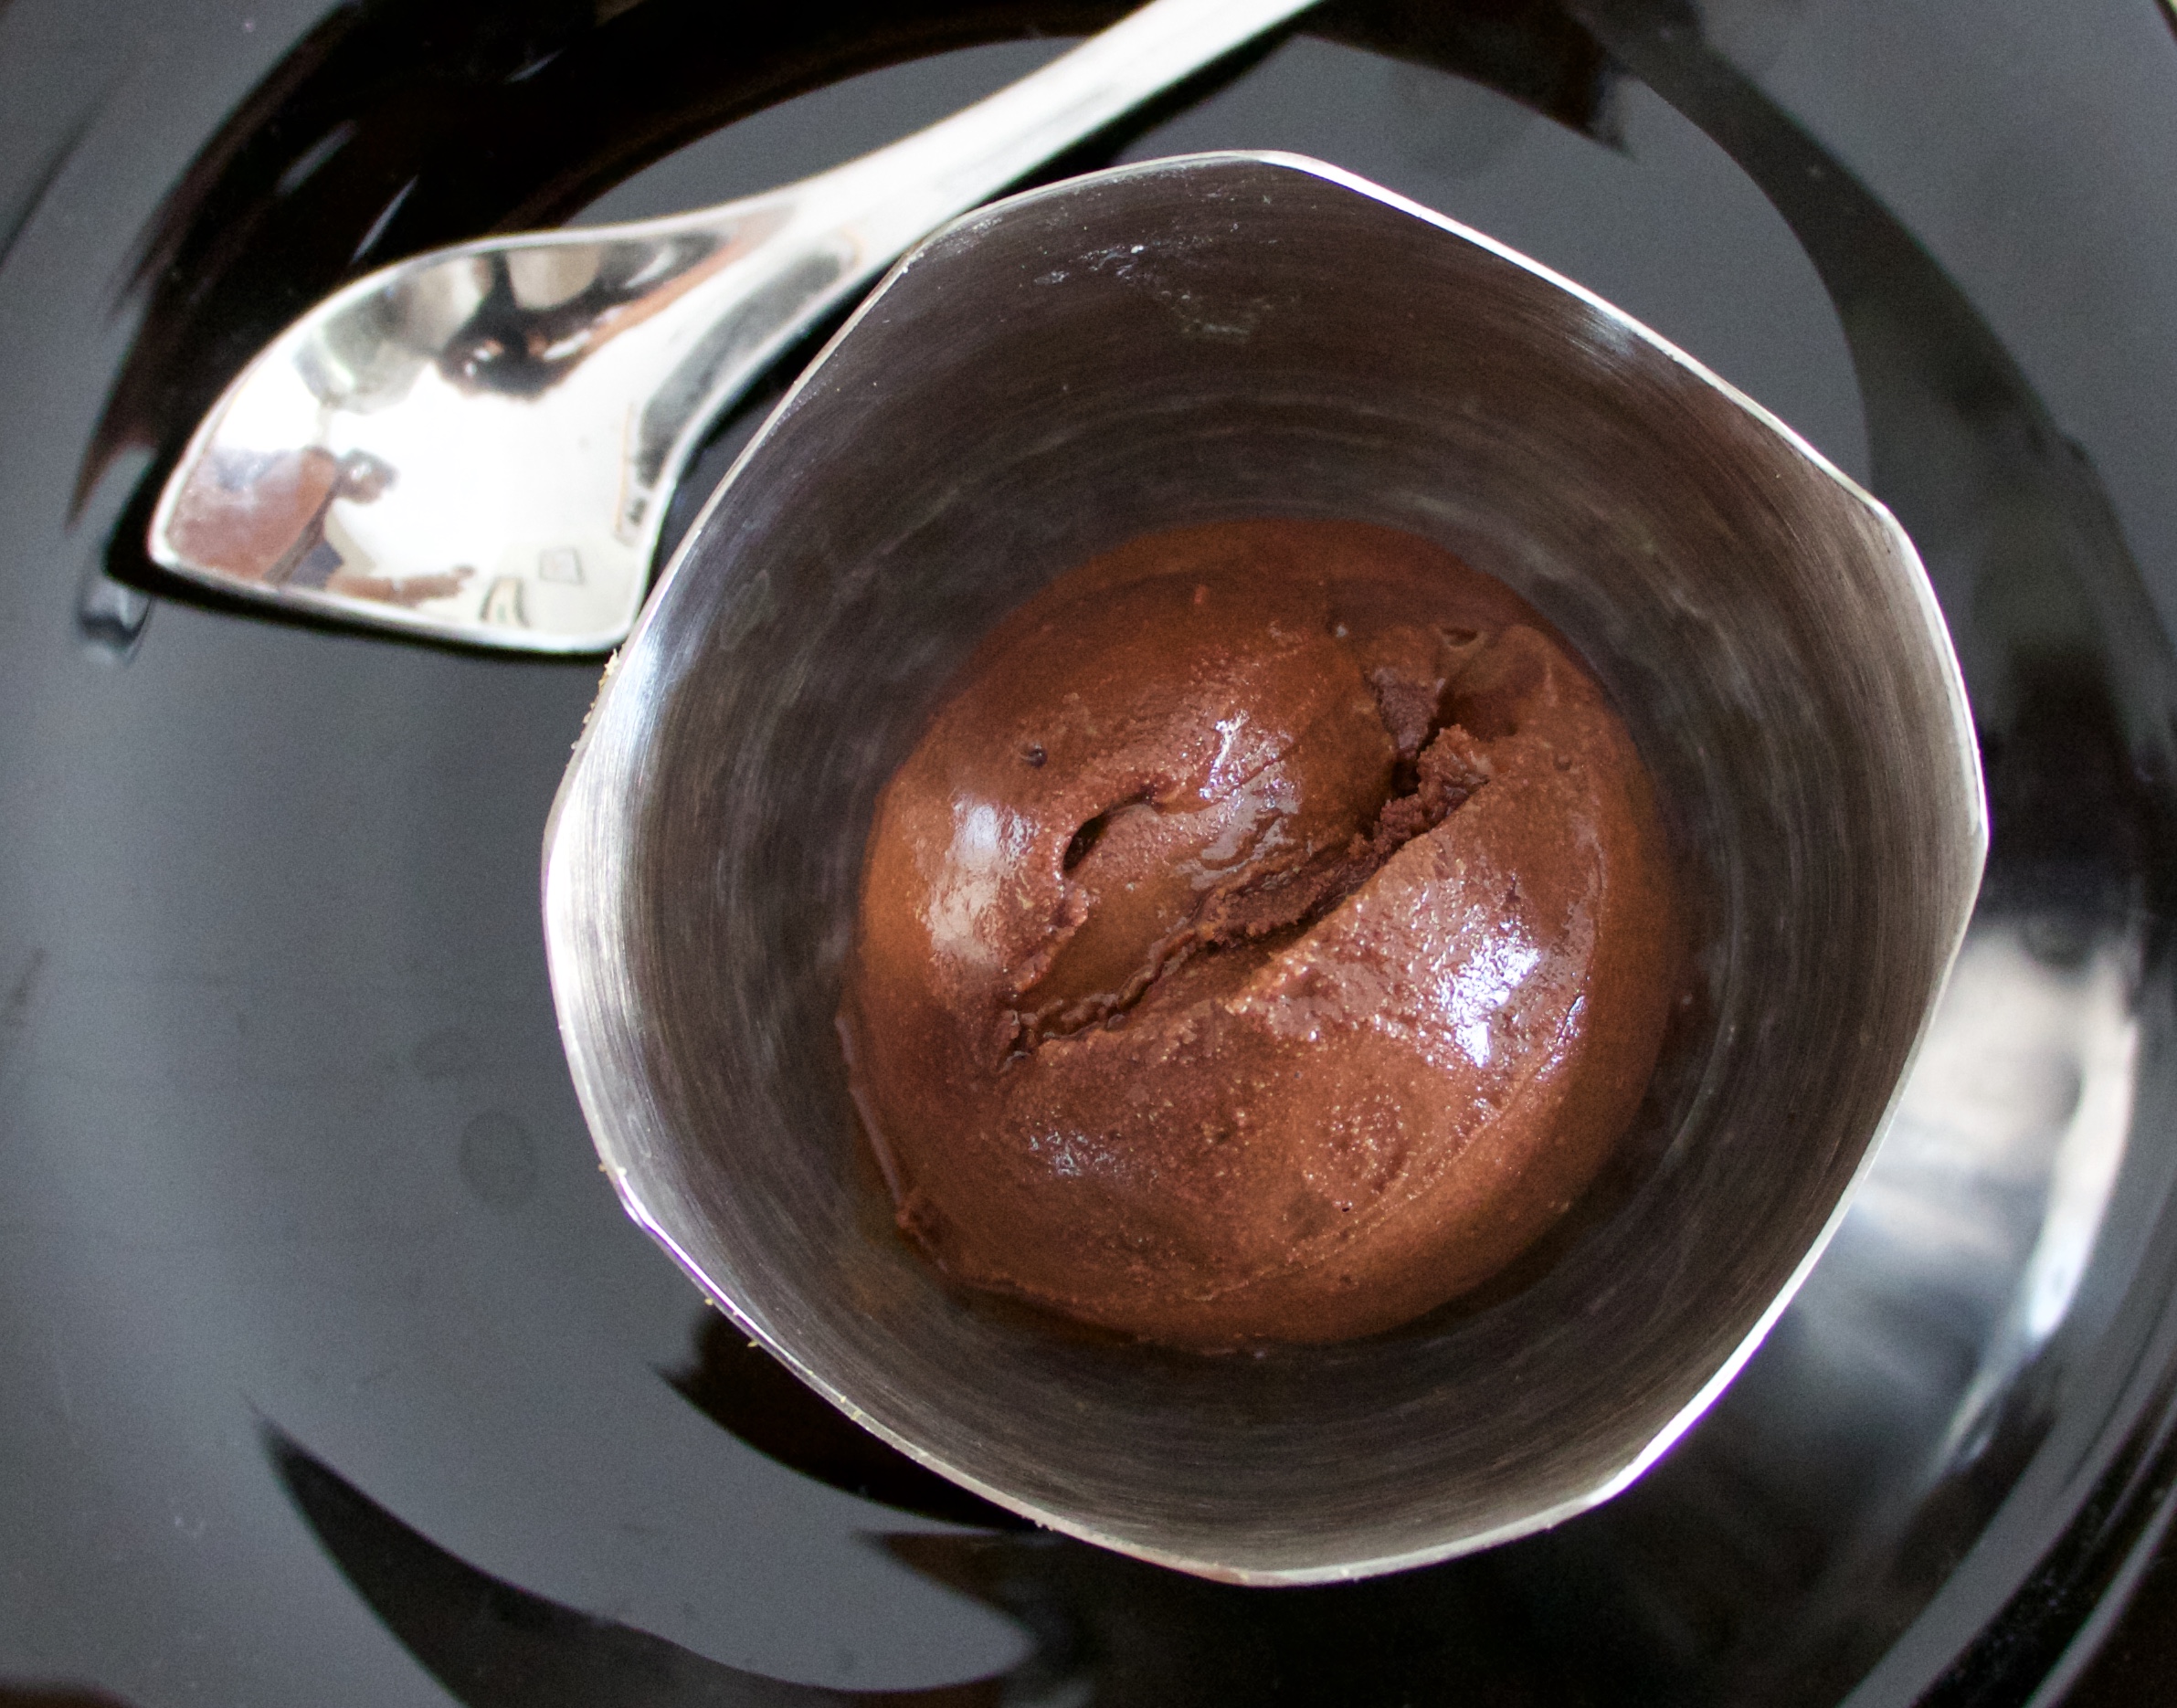 Chocolate Sorbet